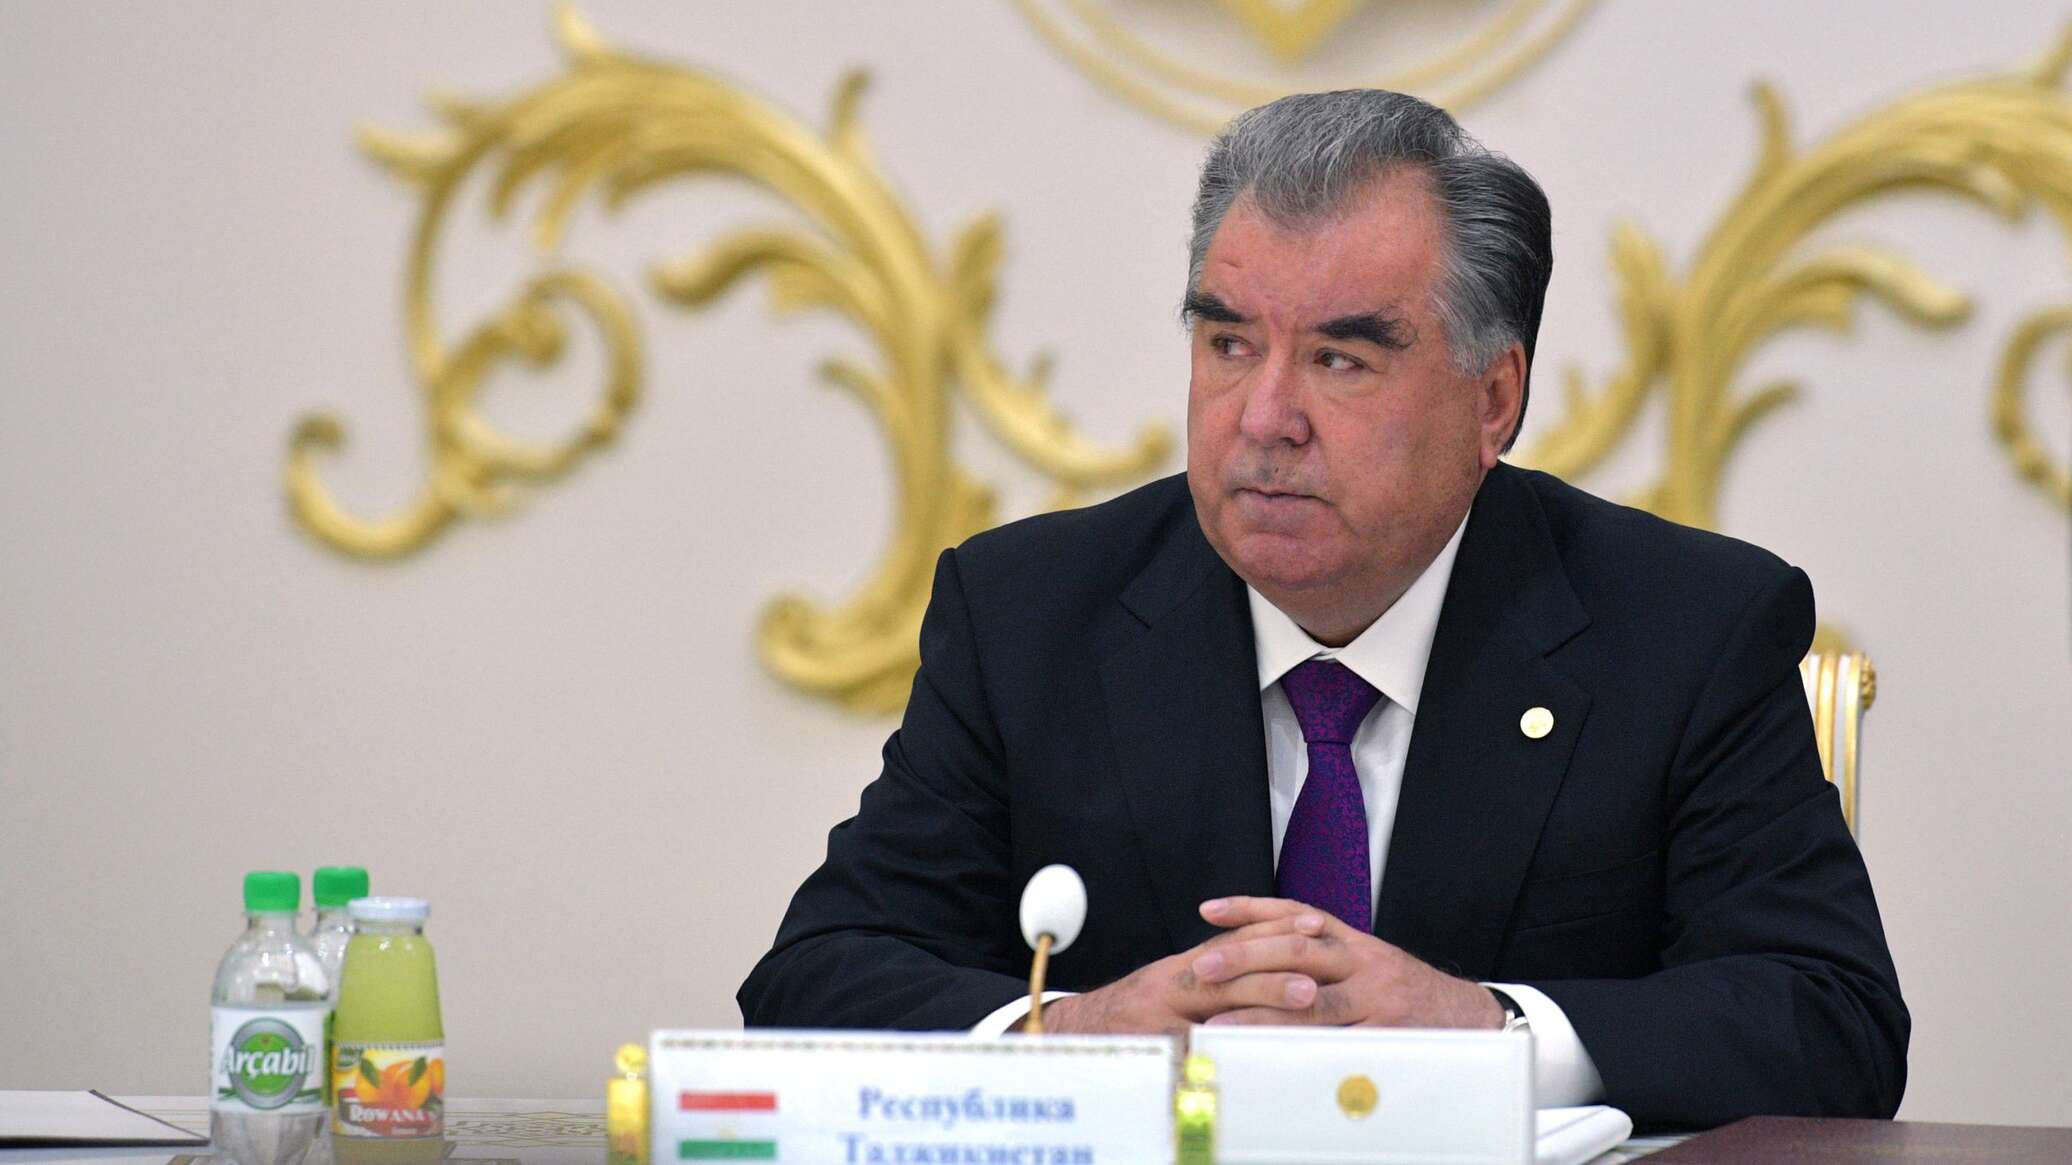 Заявление президента таджикистана. Эмомали Рахмонов. Фото президента Таджикистана Эмомали Рахмон.